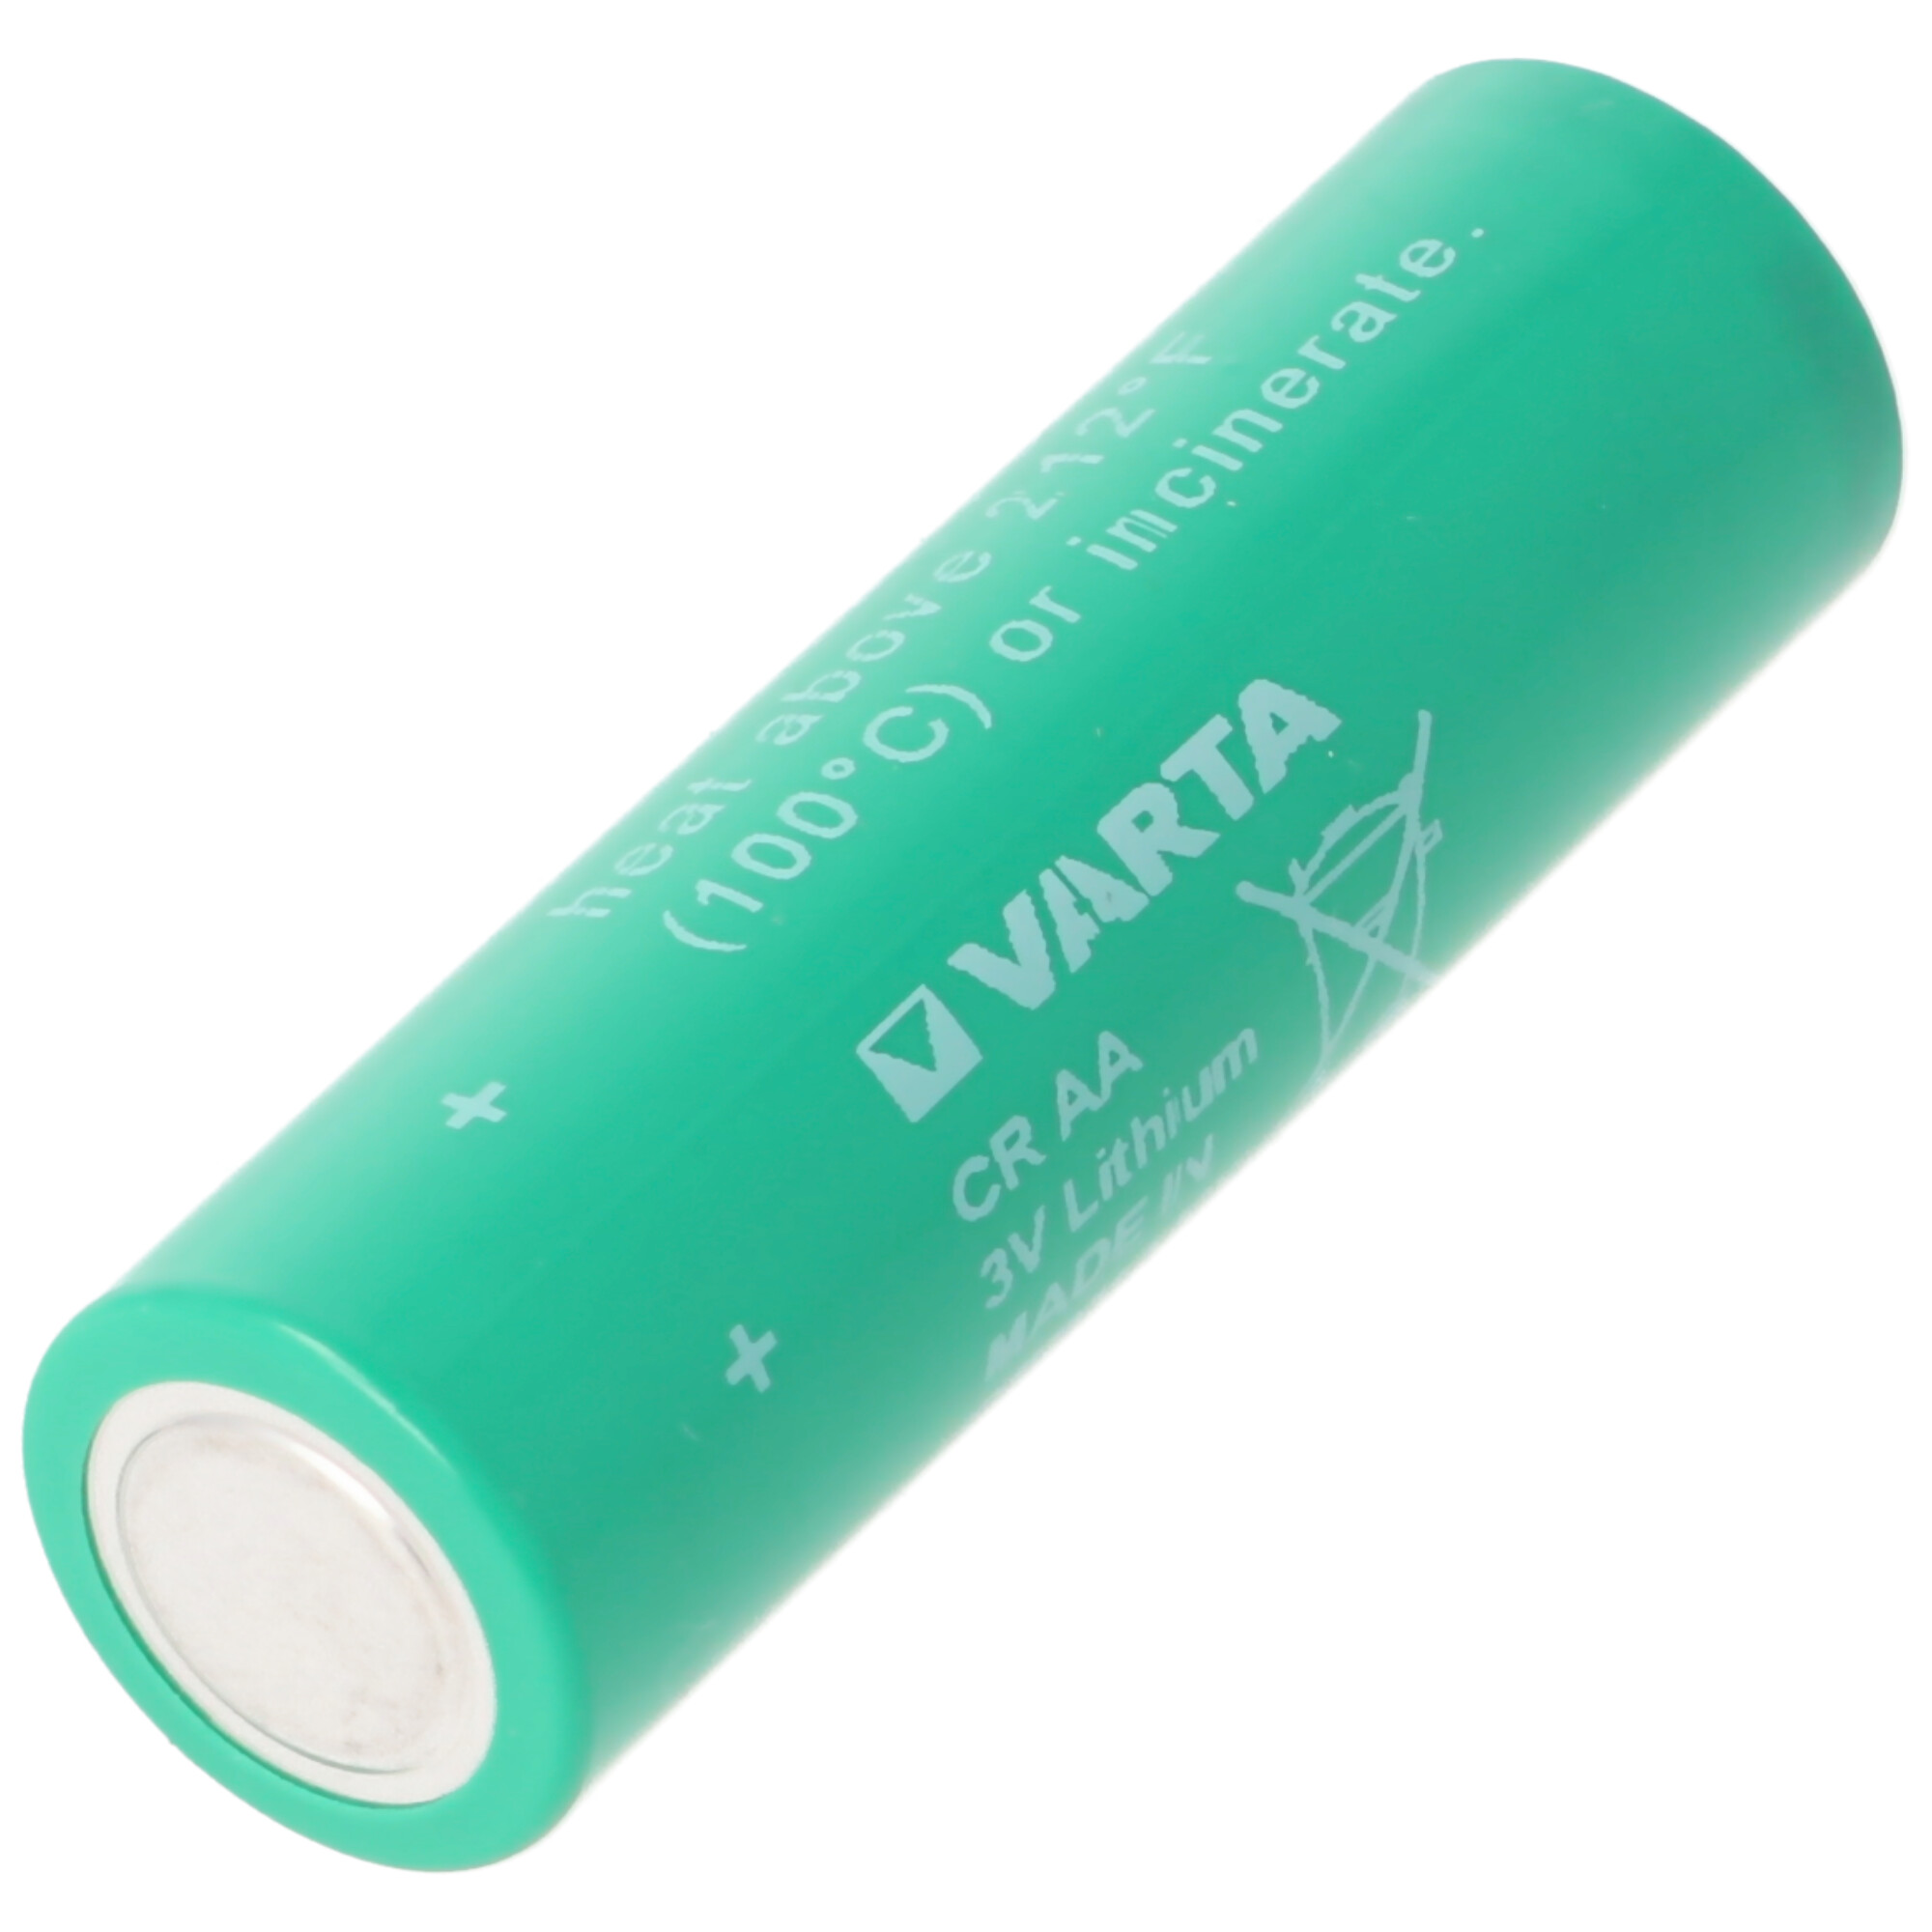 Varta CR AA Lithium Batterie 6117, UL MH 13654 (N), 6117101301